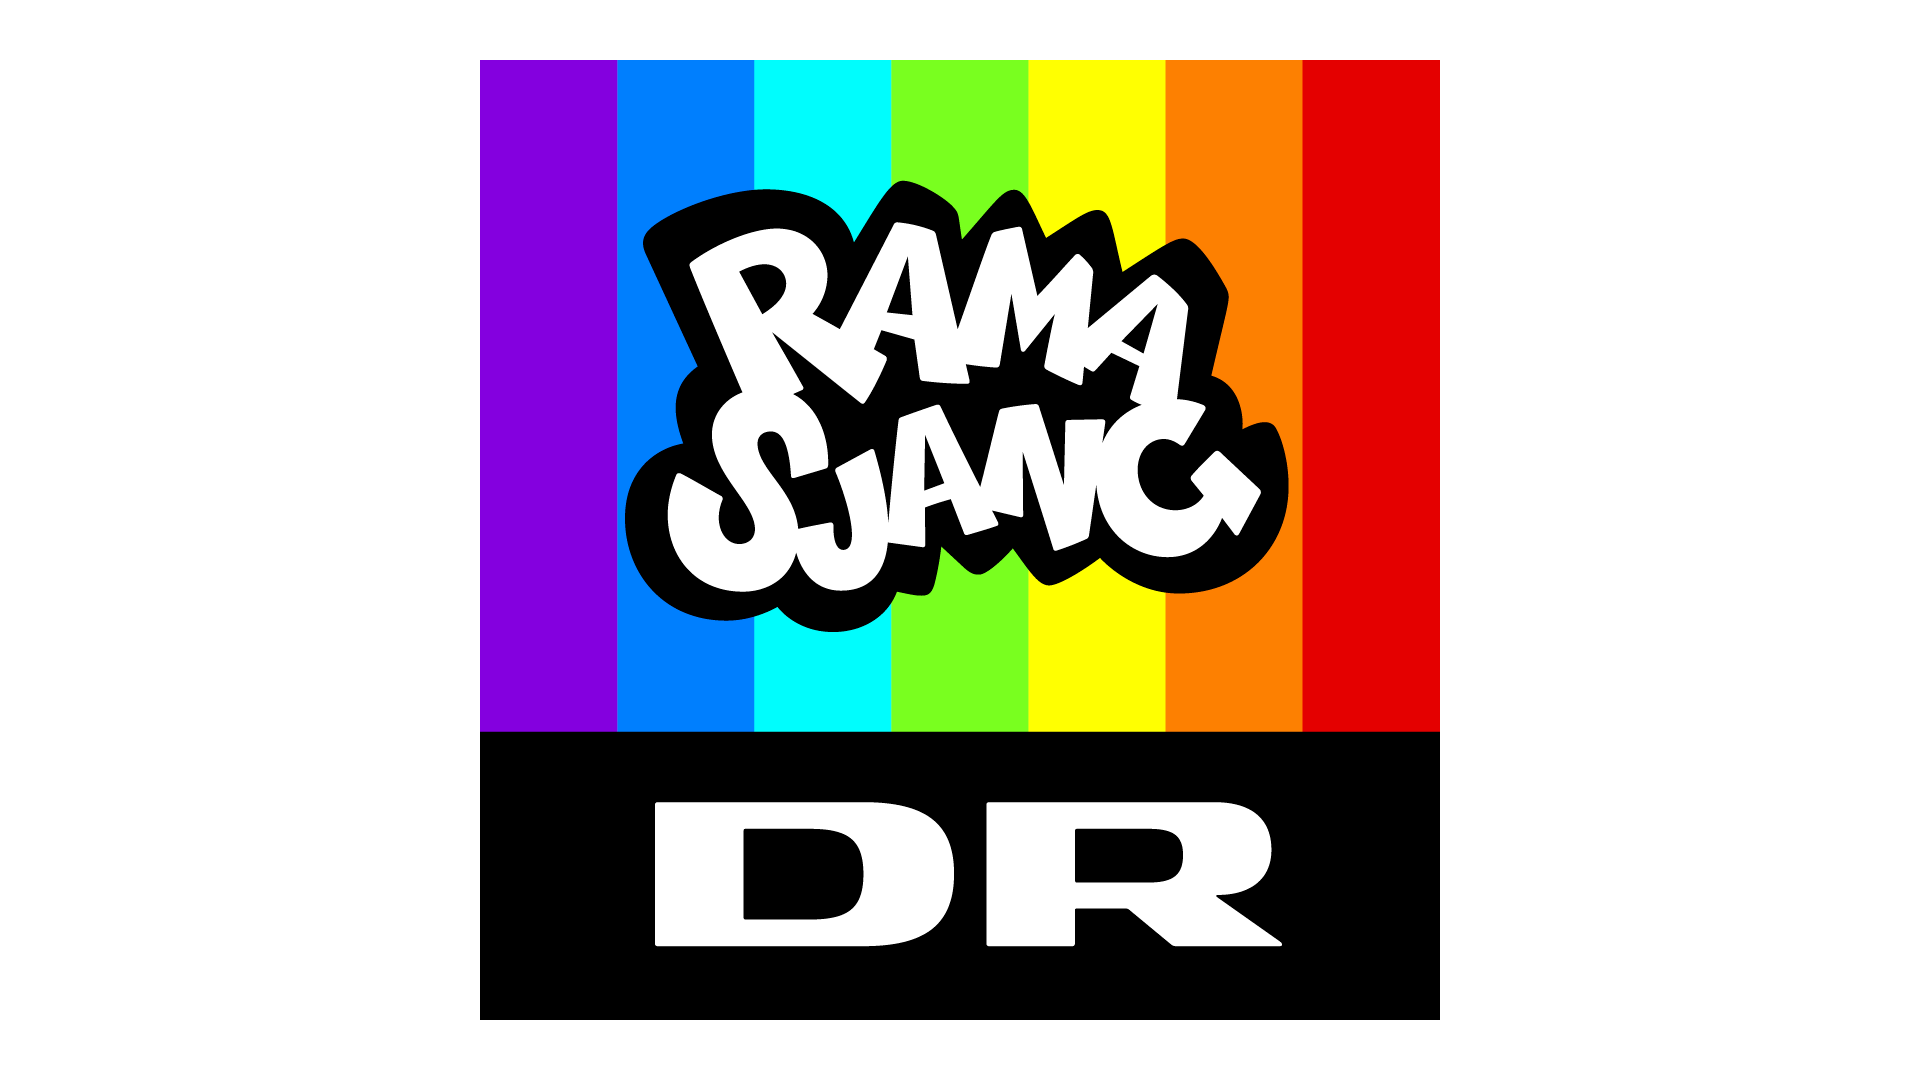 DR Ramasjang Live TV, Online